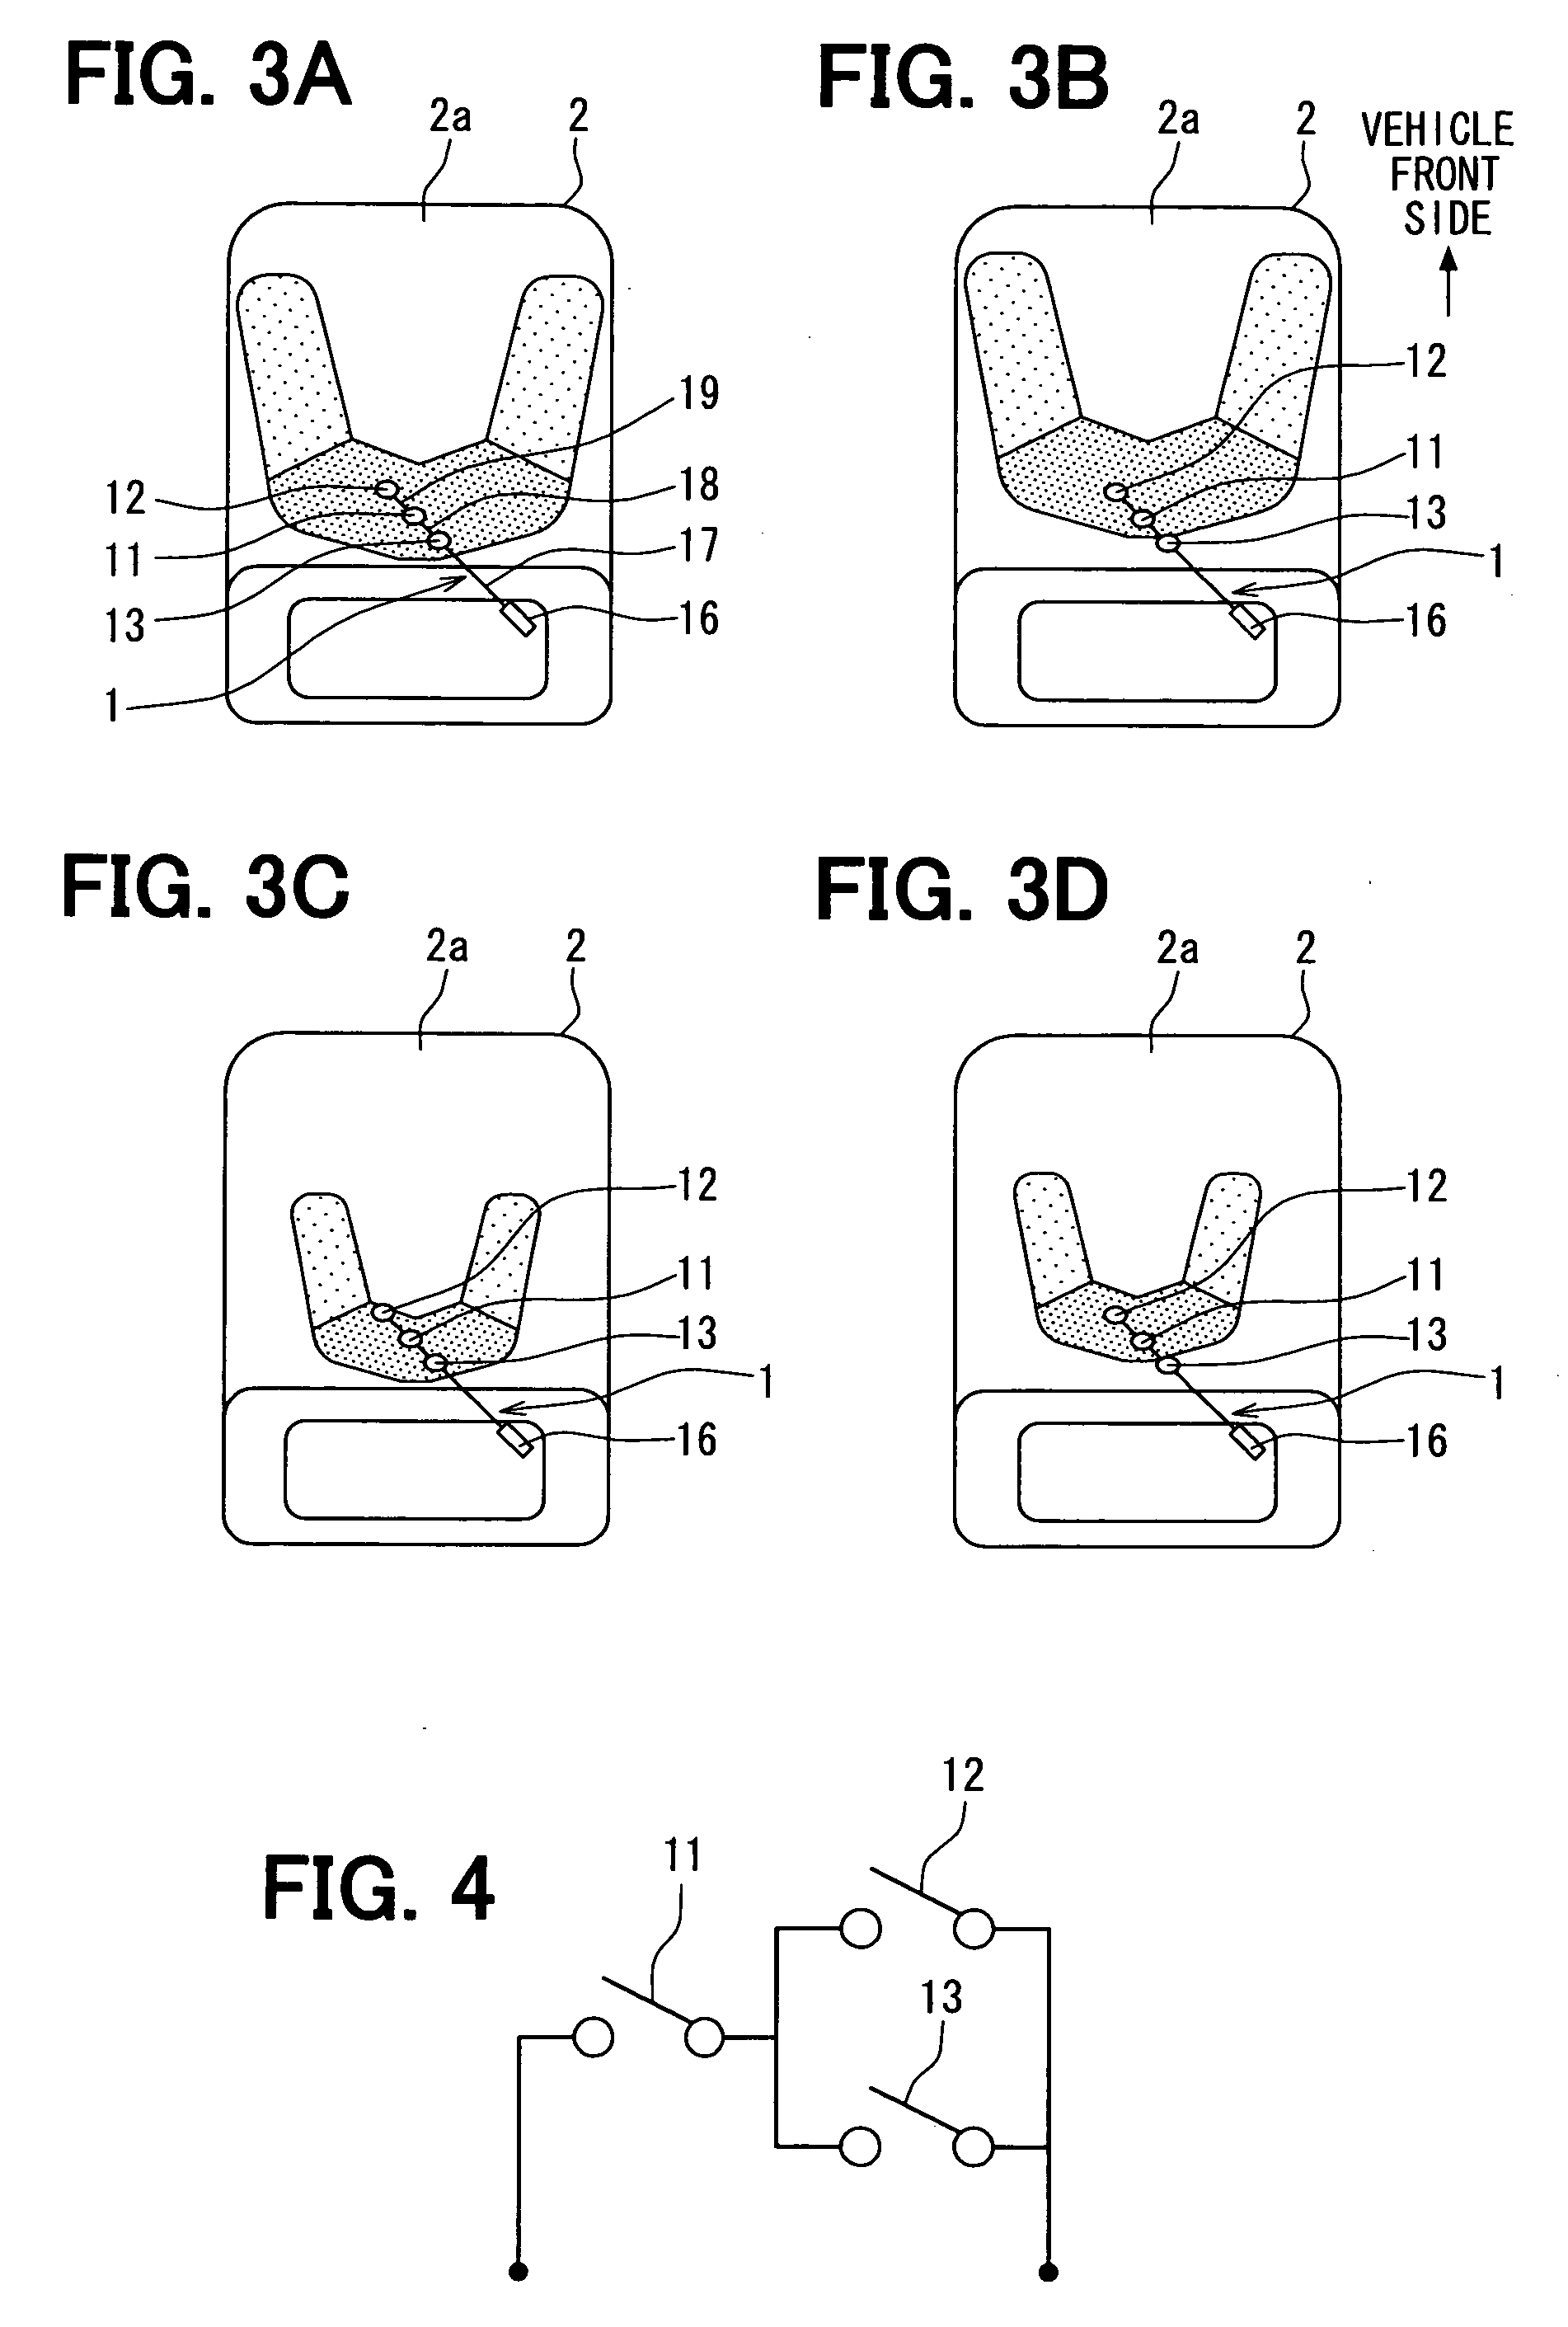 Seating sensor